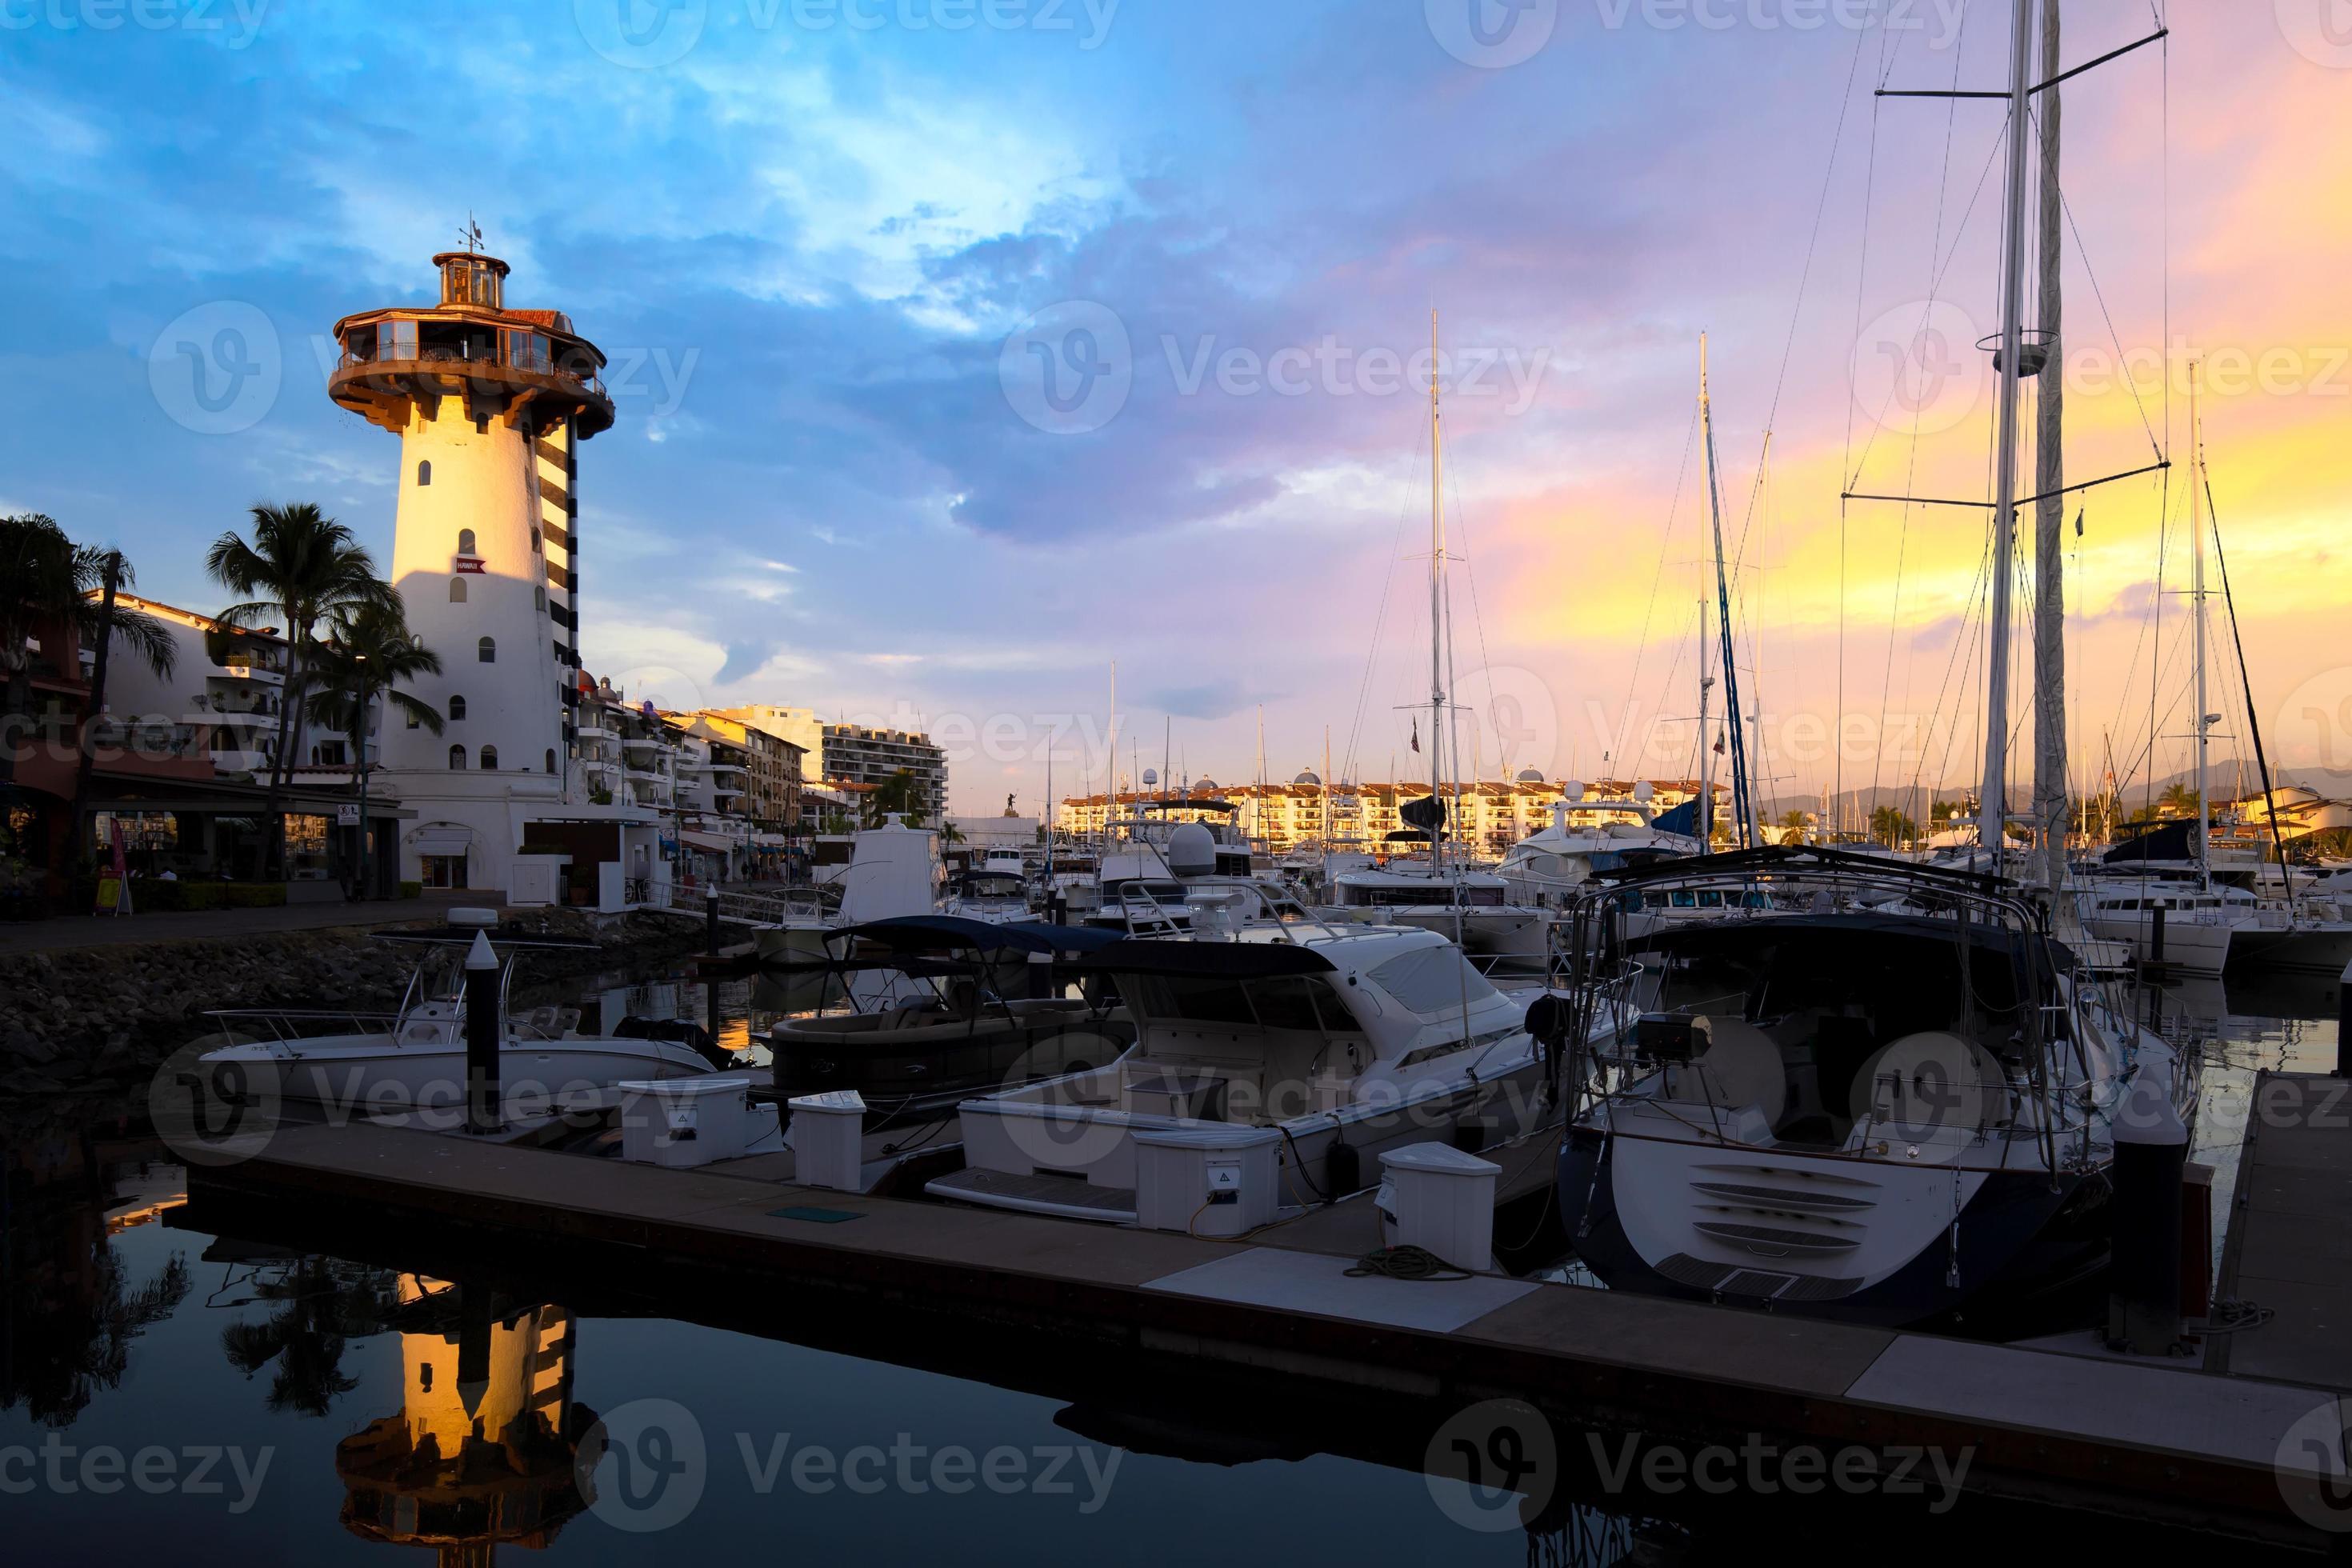 mexiko, panoramablick auf marina und yachtclub in puerto vallarta bei sonnenuntergang foto